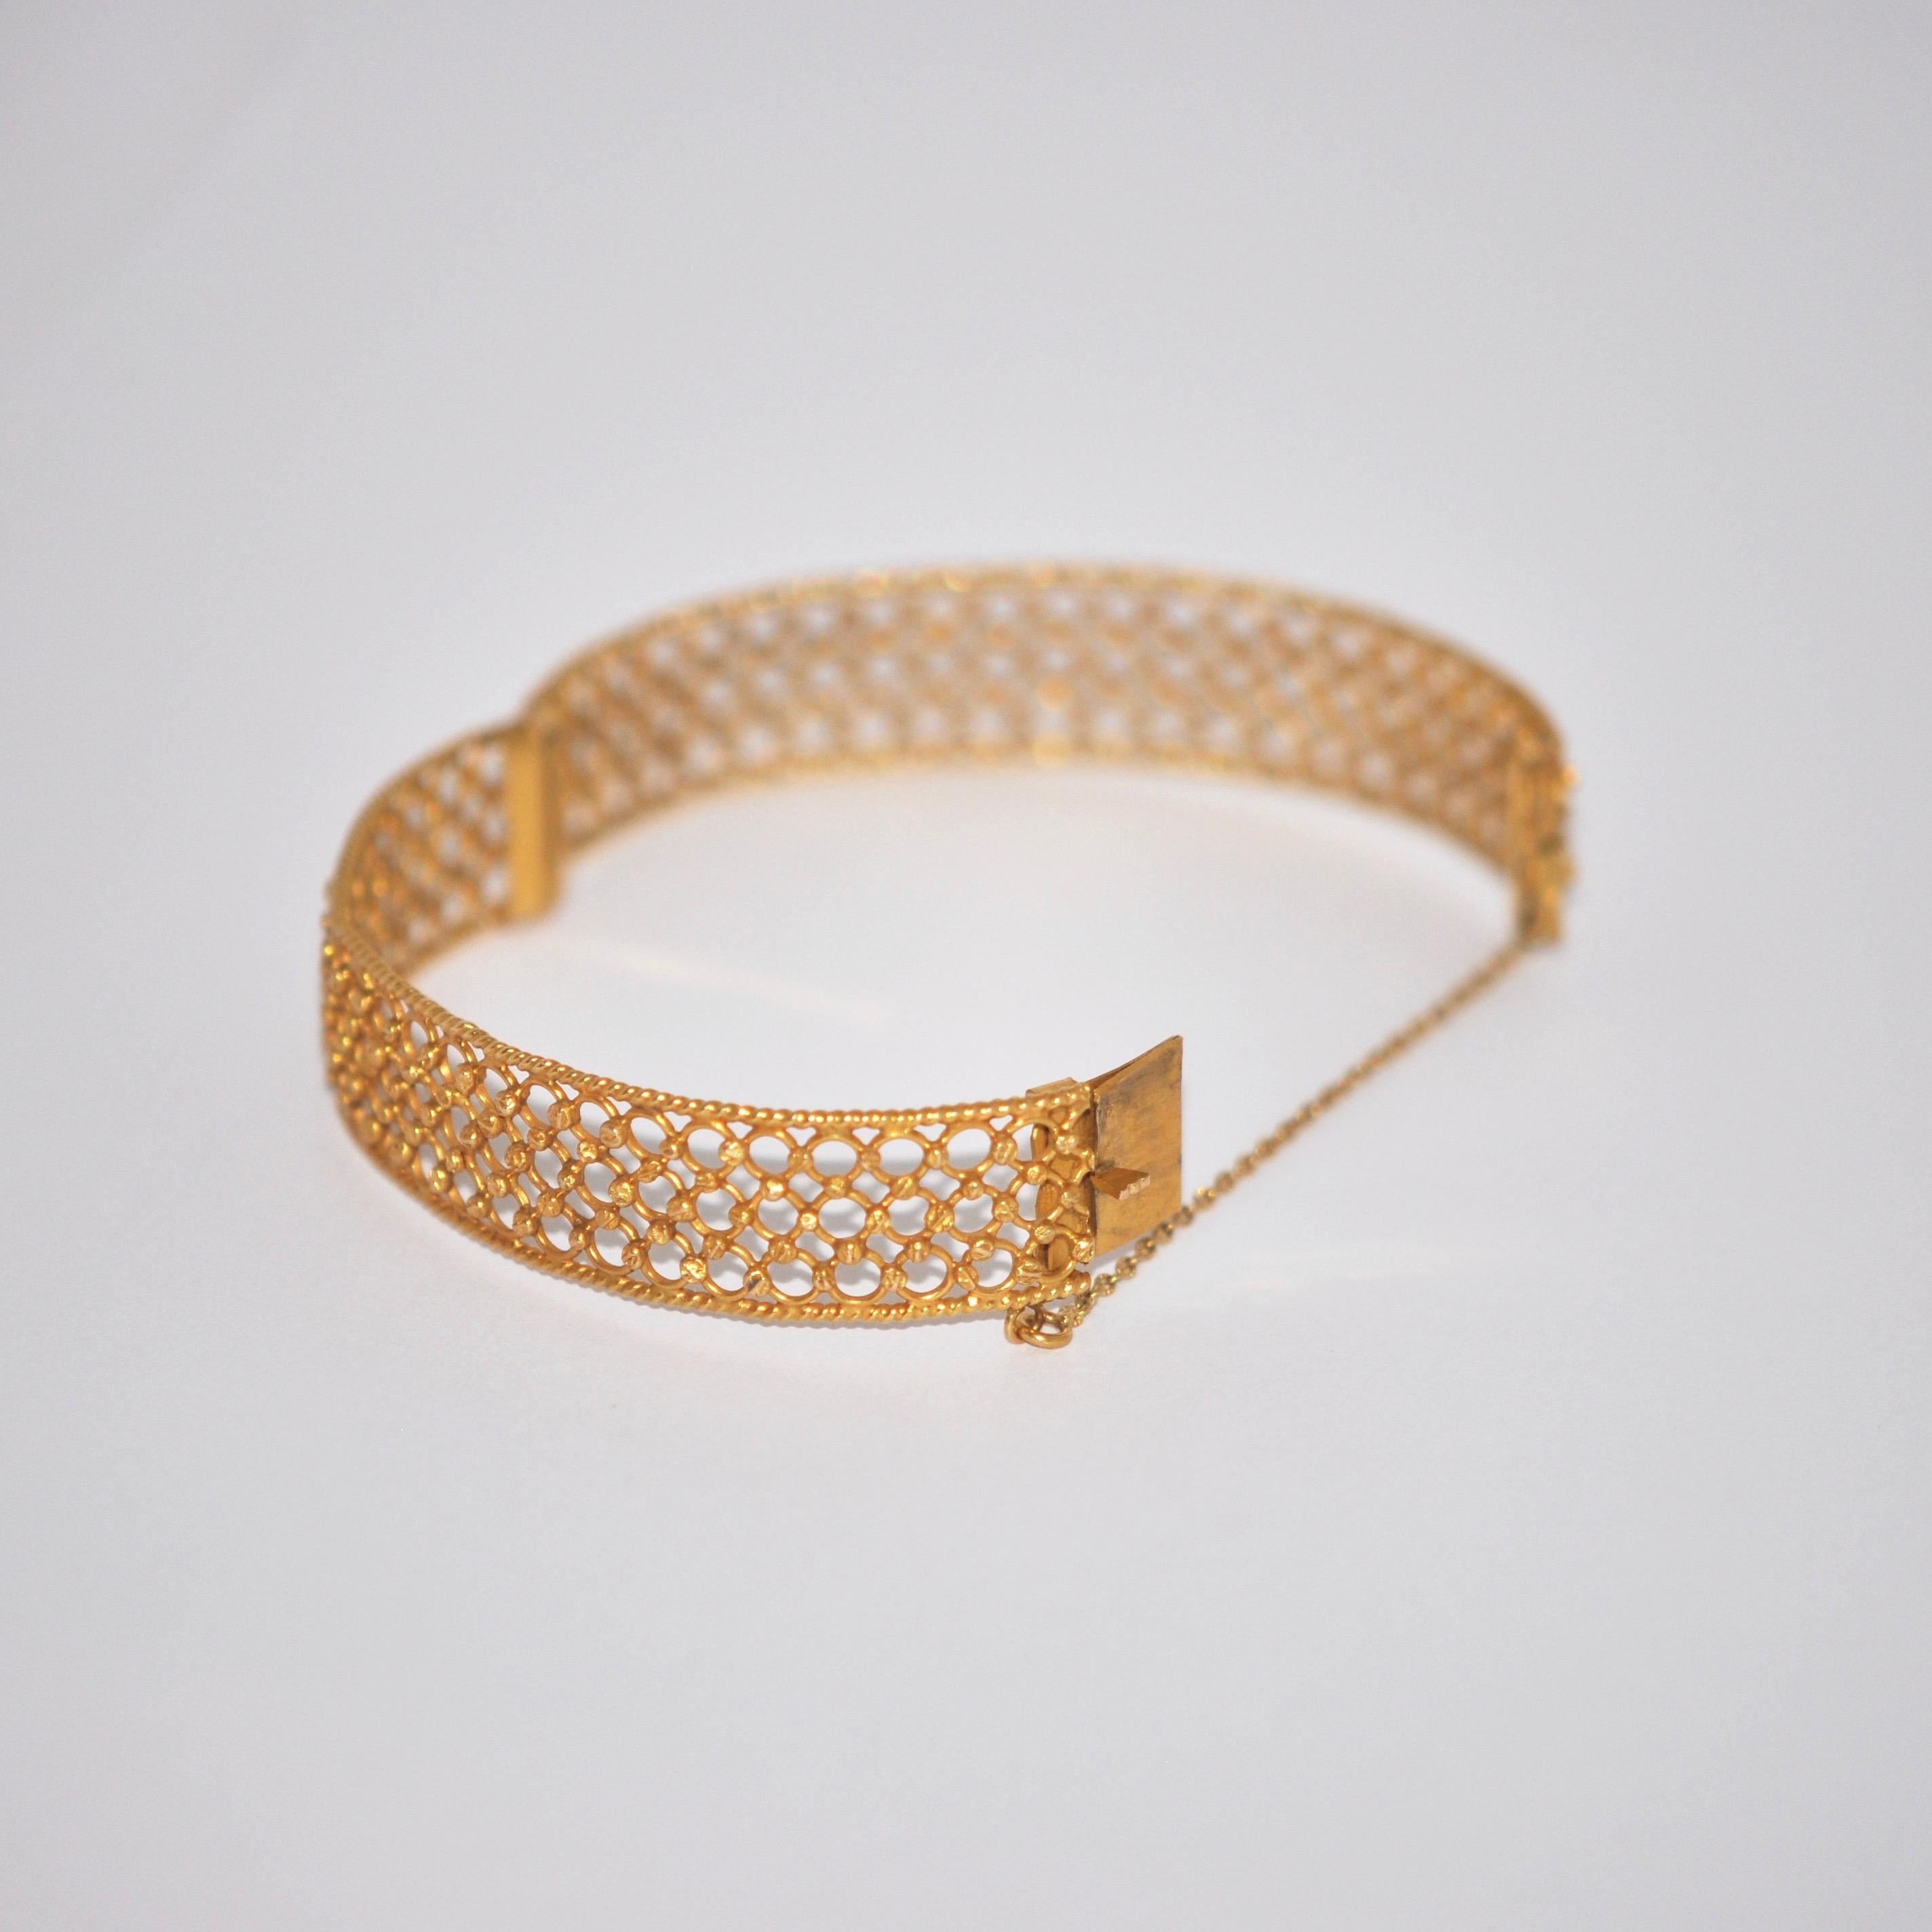 Discover this Yellow Gold 18 Karat Cuff Bracelet.
Yellow Gold 18 Karat 
Security Chain
Diameter 6*5 cm
